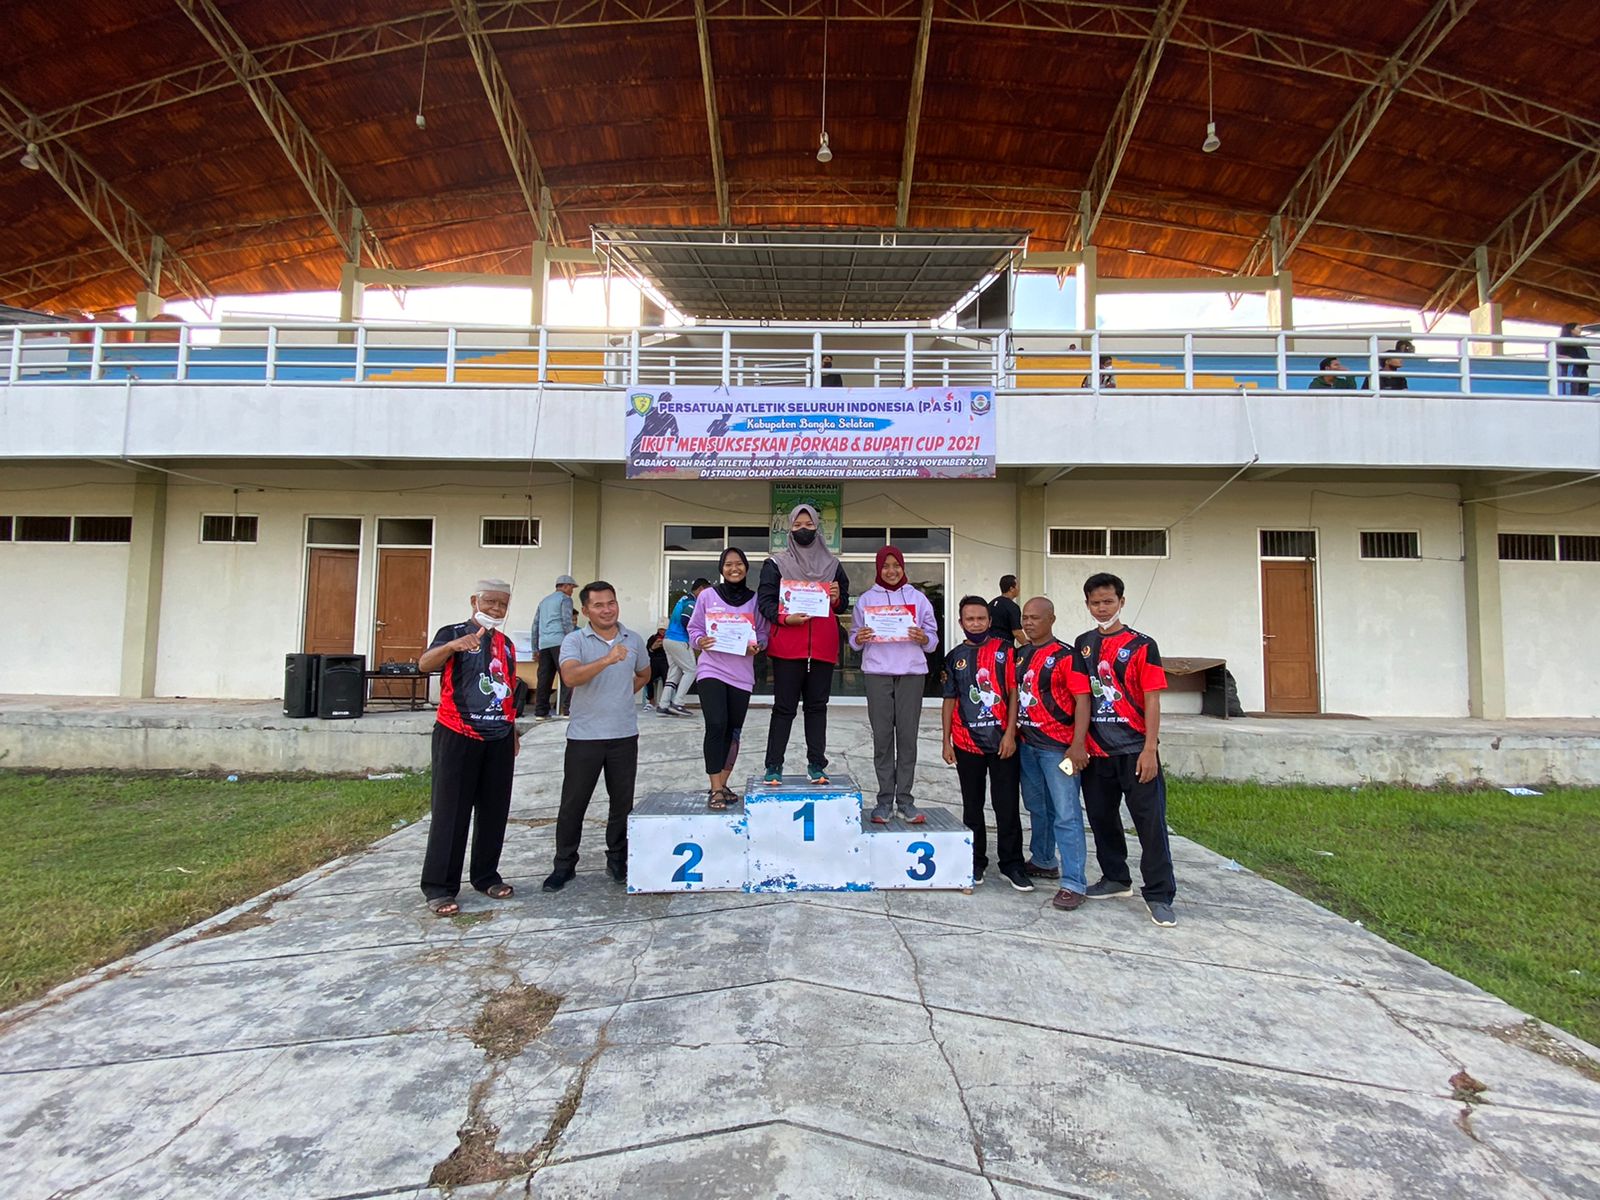 Foto Pekan Olahraga Kabupaten Bupati Cup 1